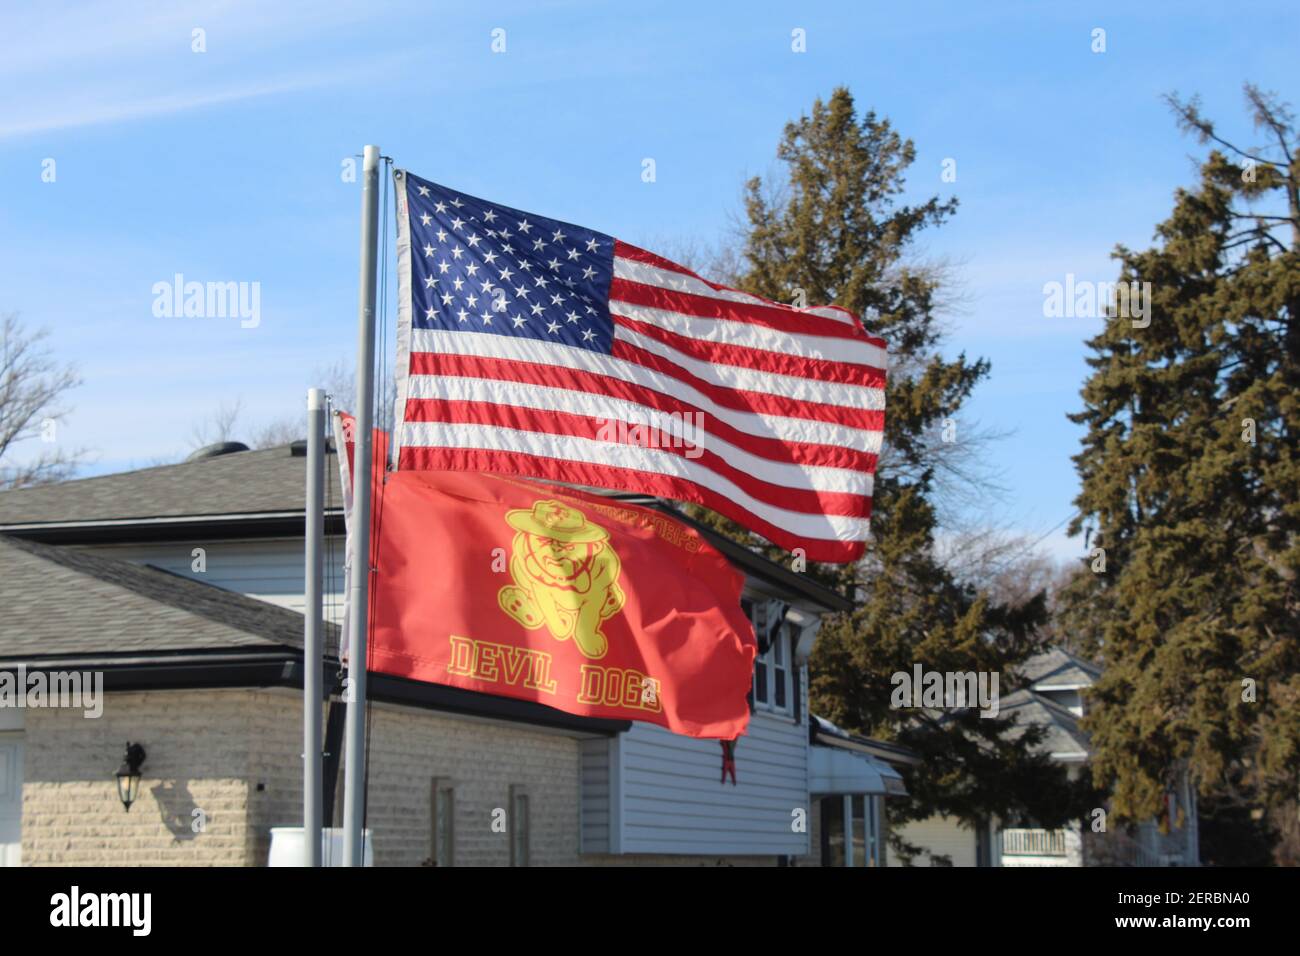 USA Flagge mit US Marine Corps Devil Dogs Flagge darunter in des Plaines, Illinois Stockfoto